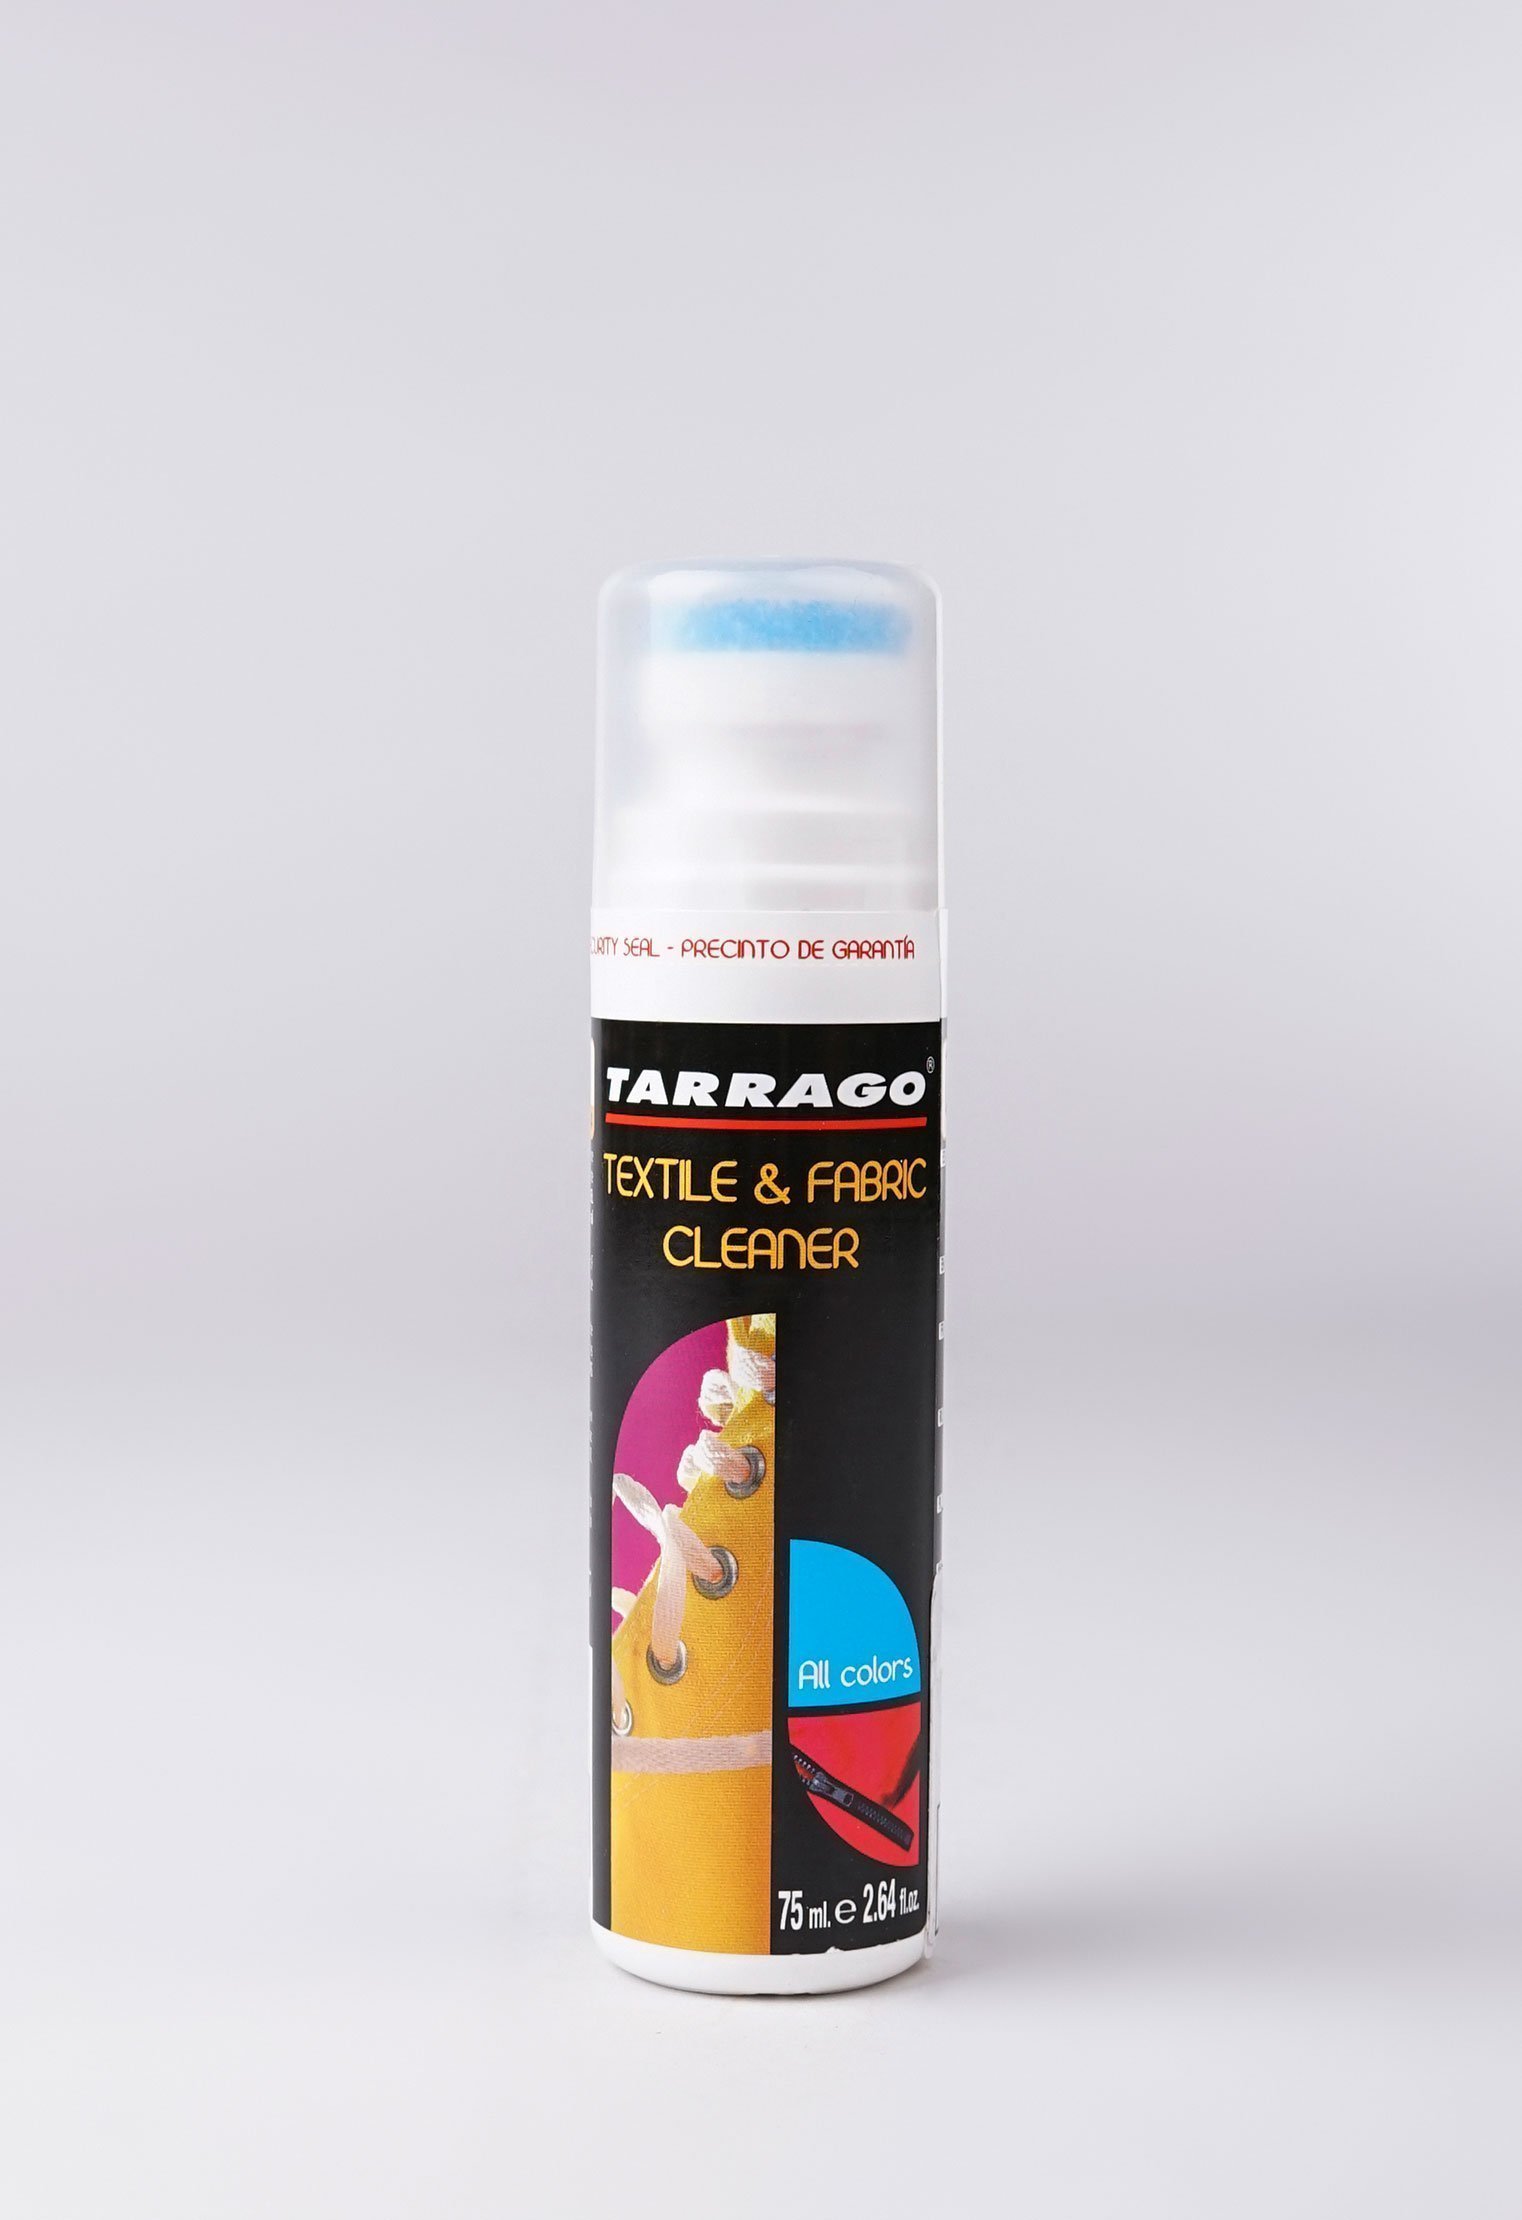 очиститель wiko cleaner 20 Шампуни и очистители 20-1057 TARRAGO - Очиститель для текстиля TEXTIL CLEANER, флакон, 75мл.